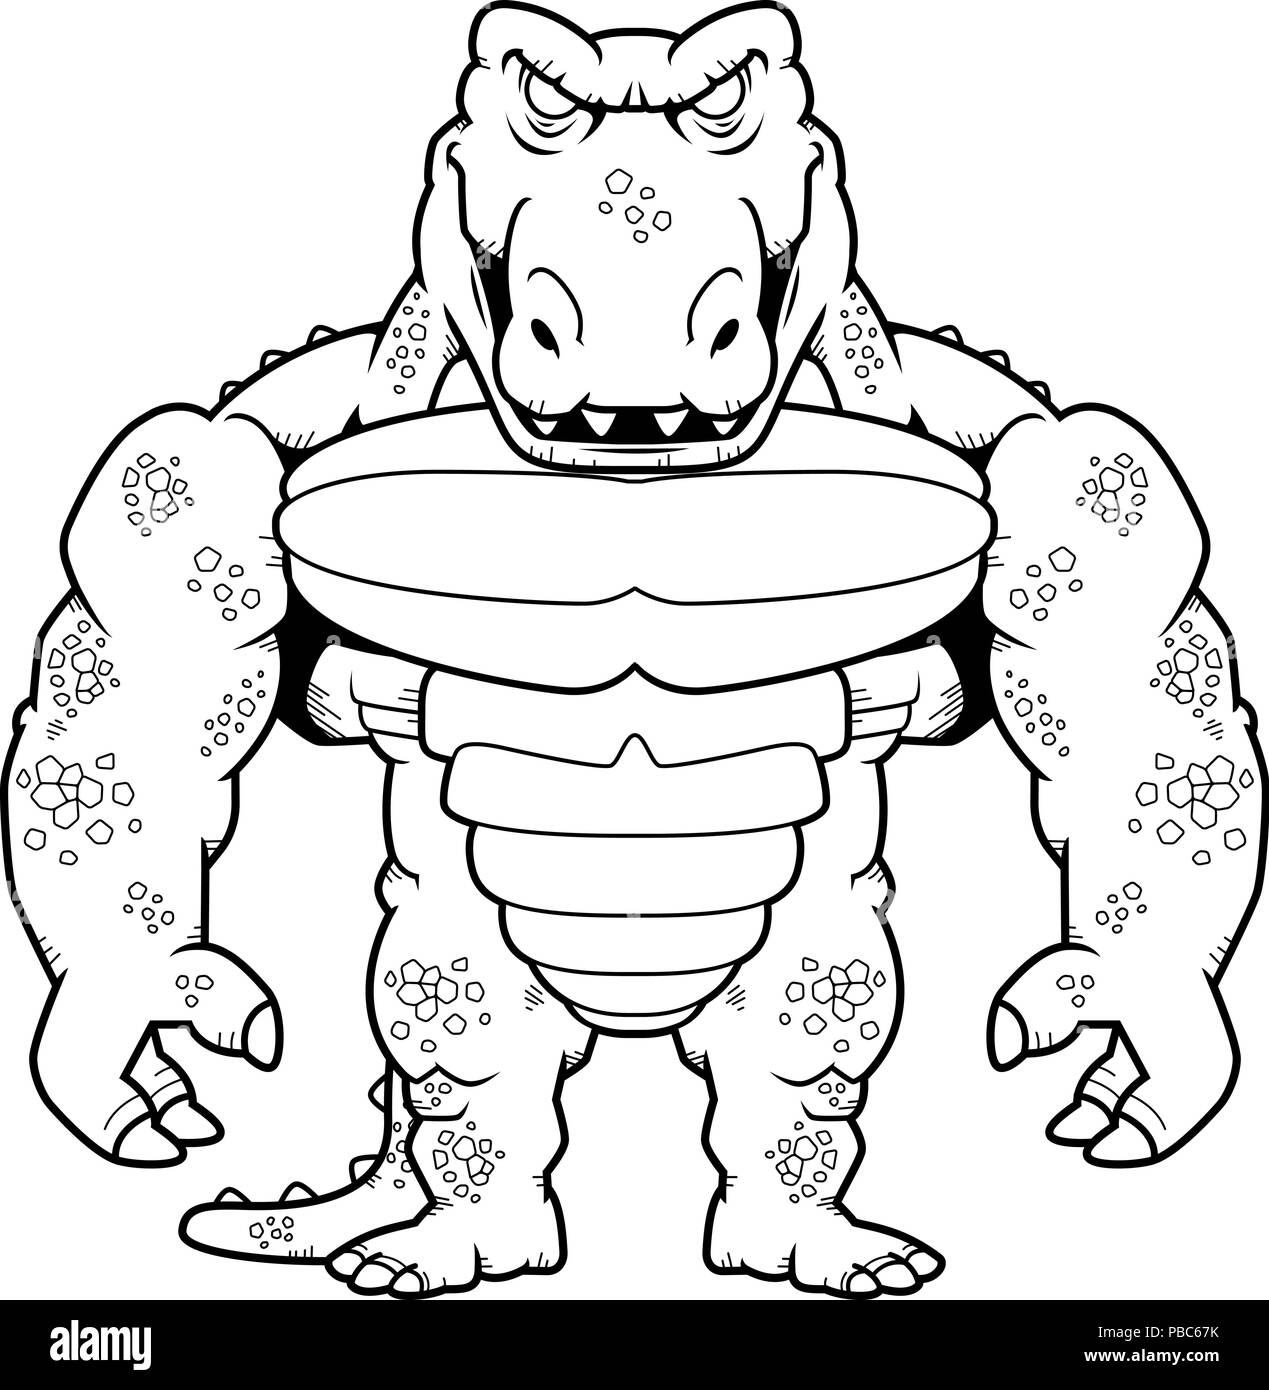 Ein Cartoon Illustration eines Krokodils monster Mann. Stock Vektor